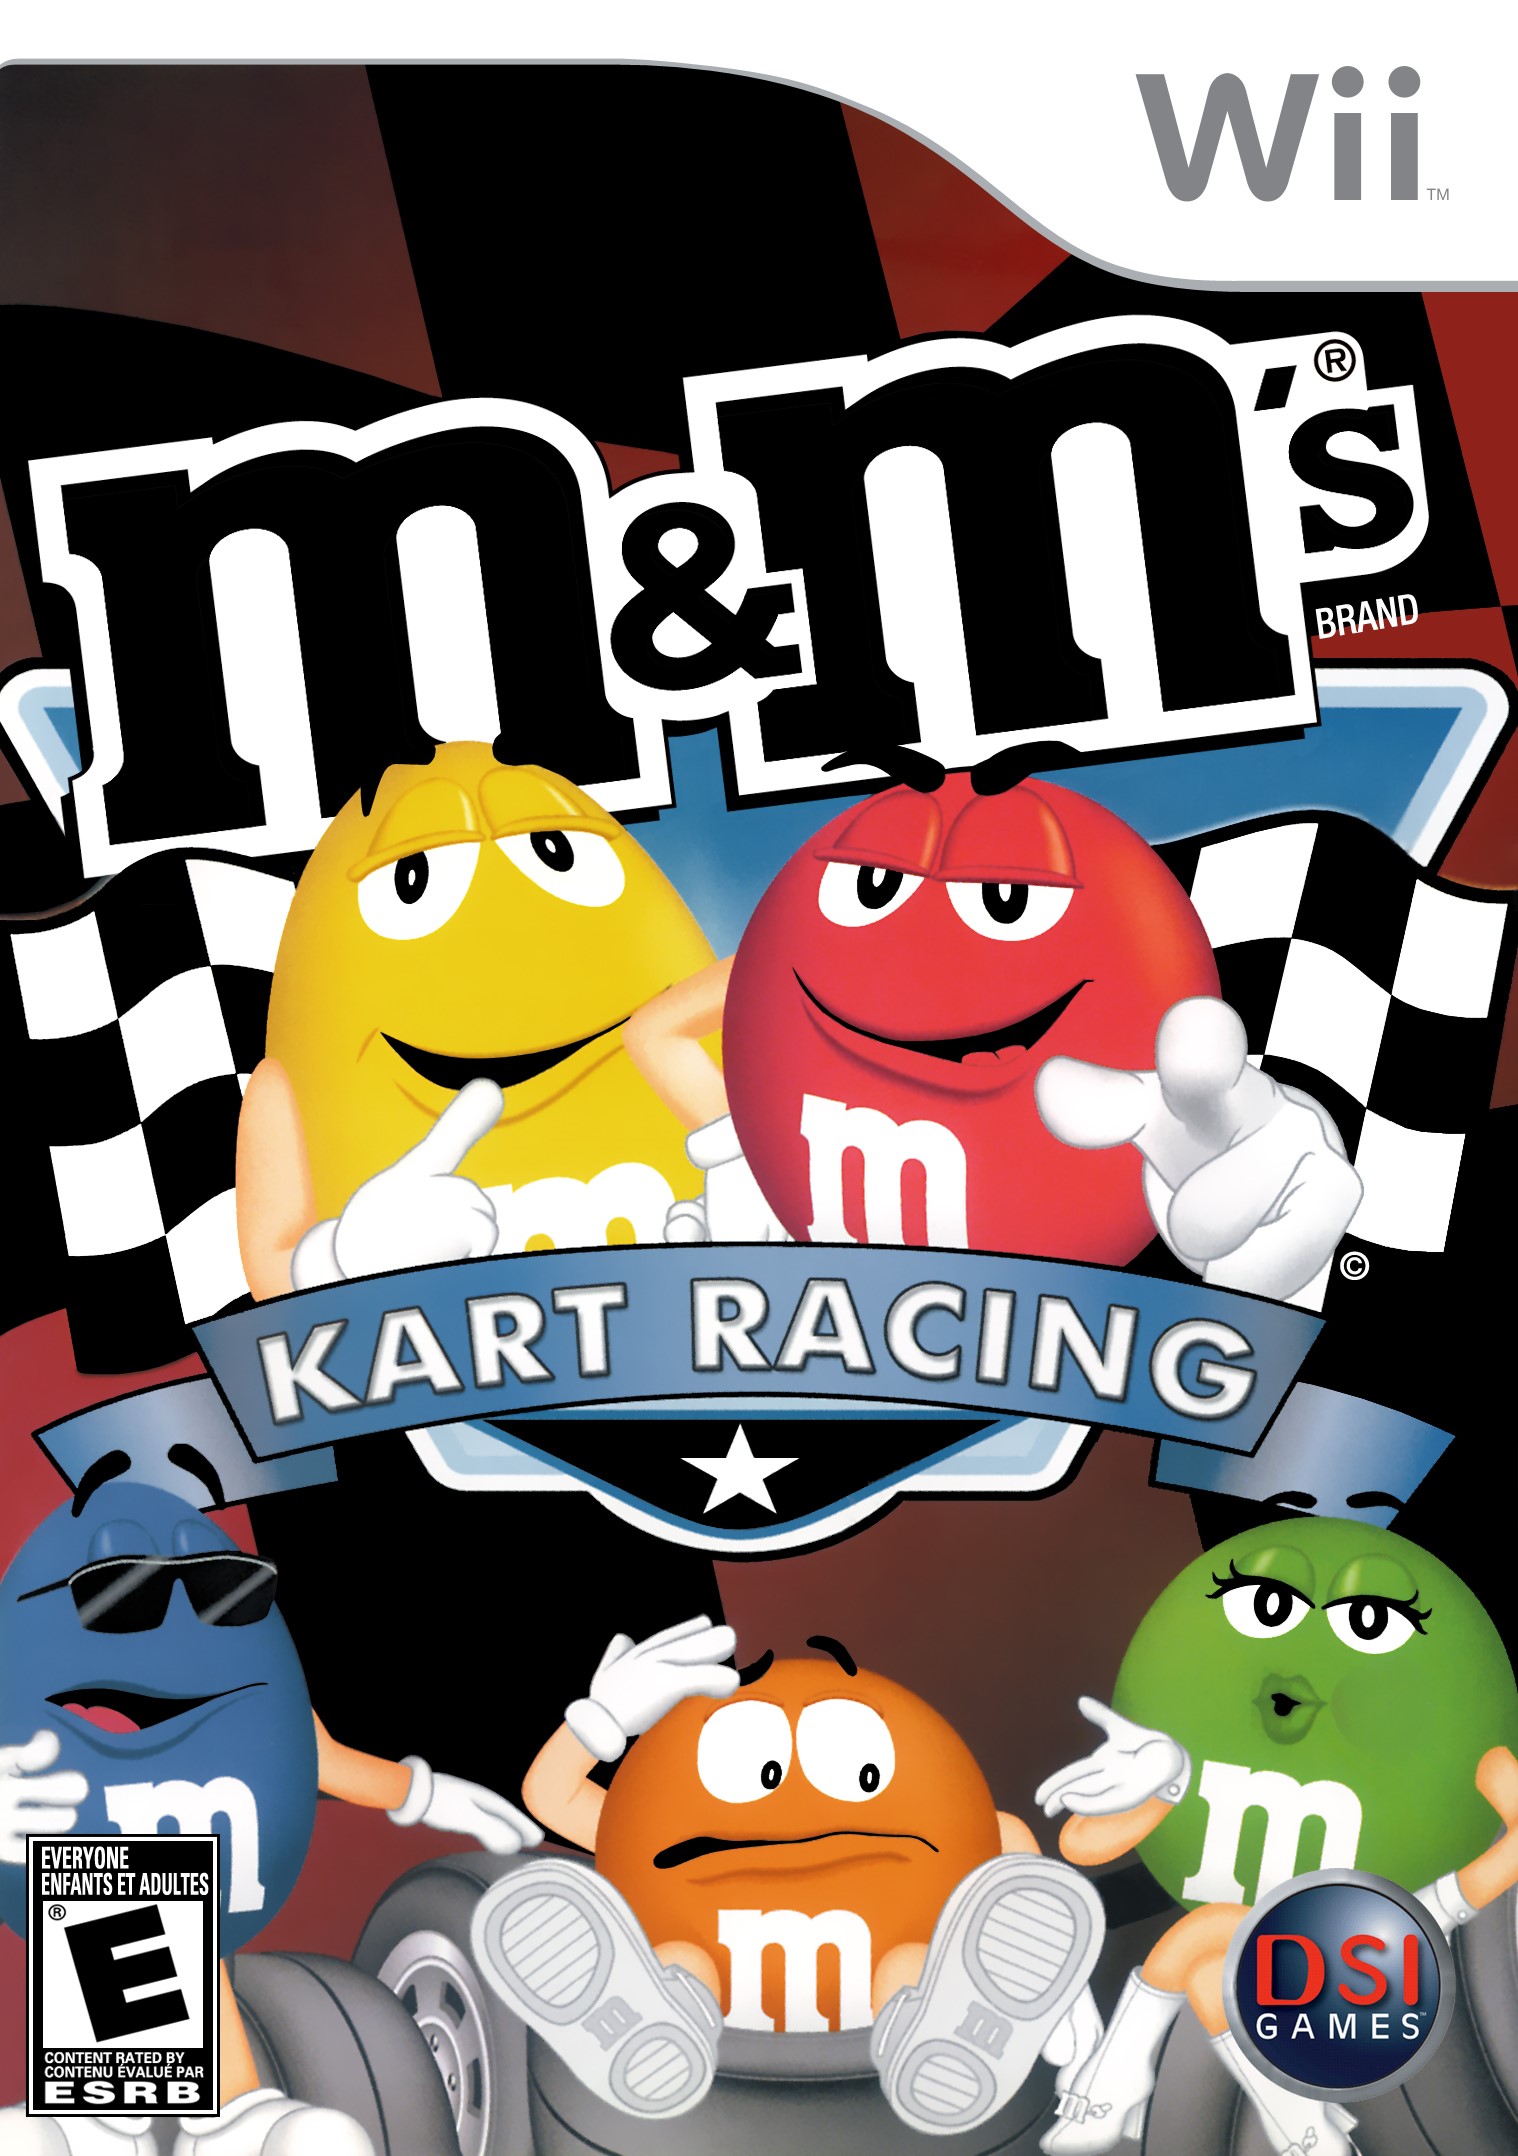 'M & M's: Kart Racing'